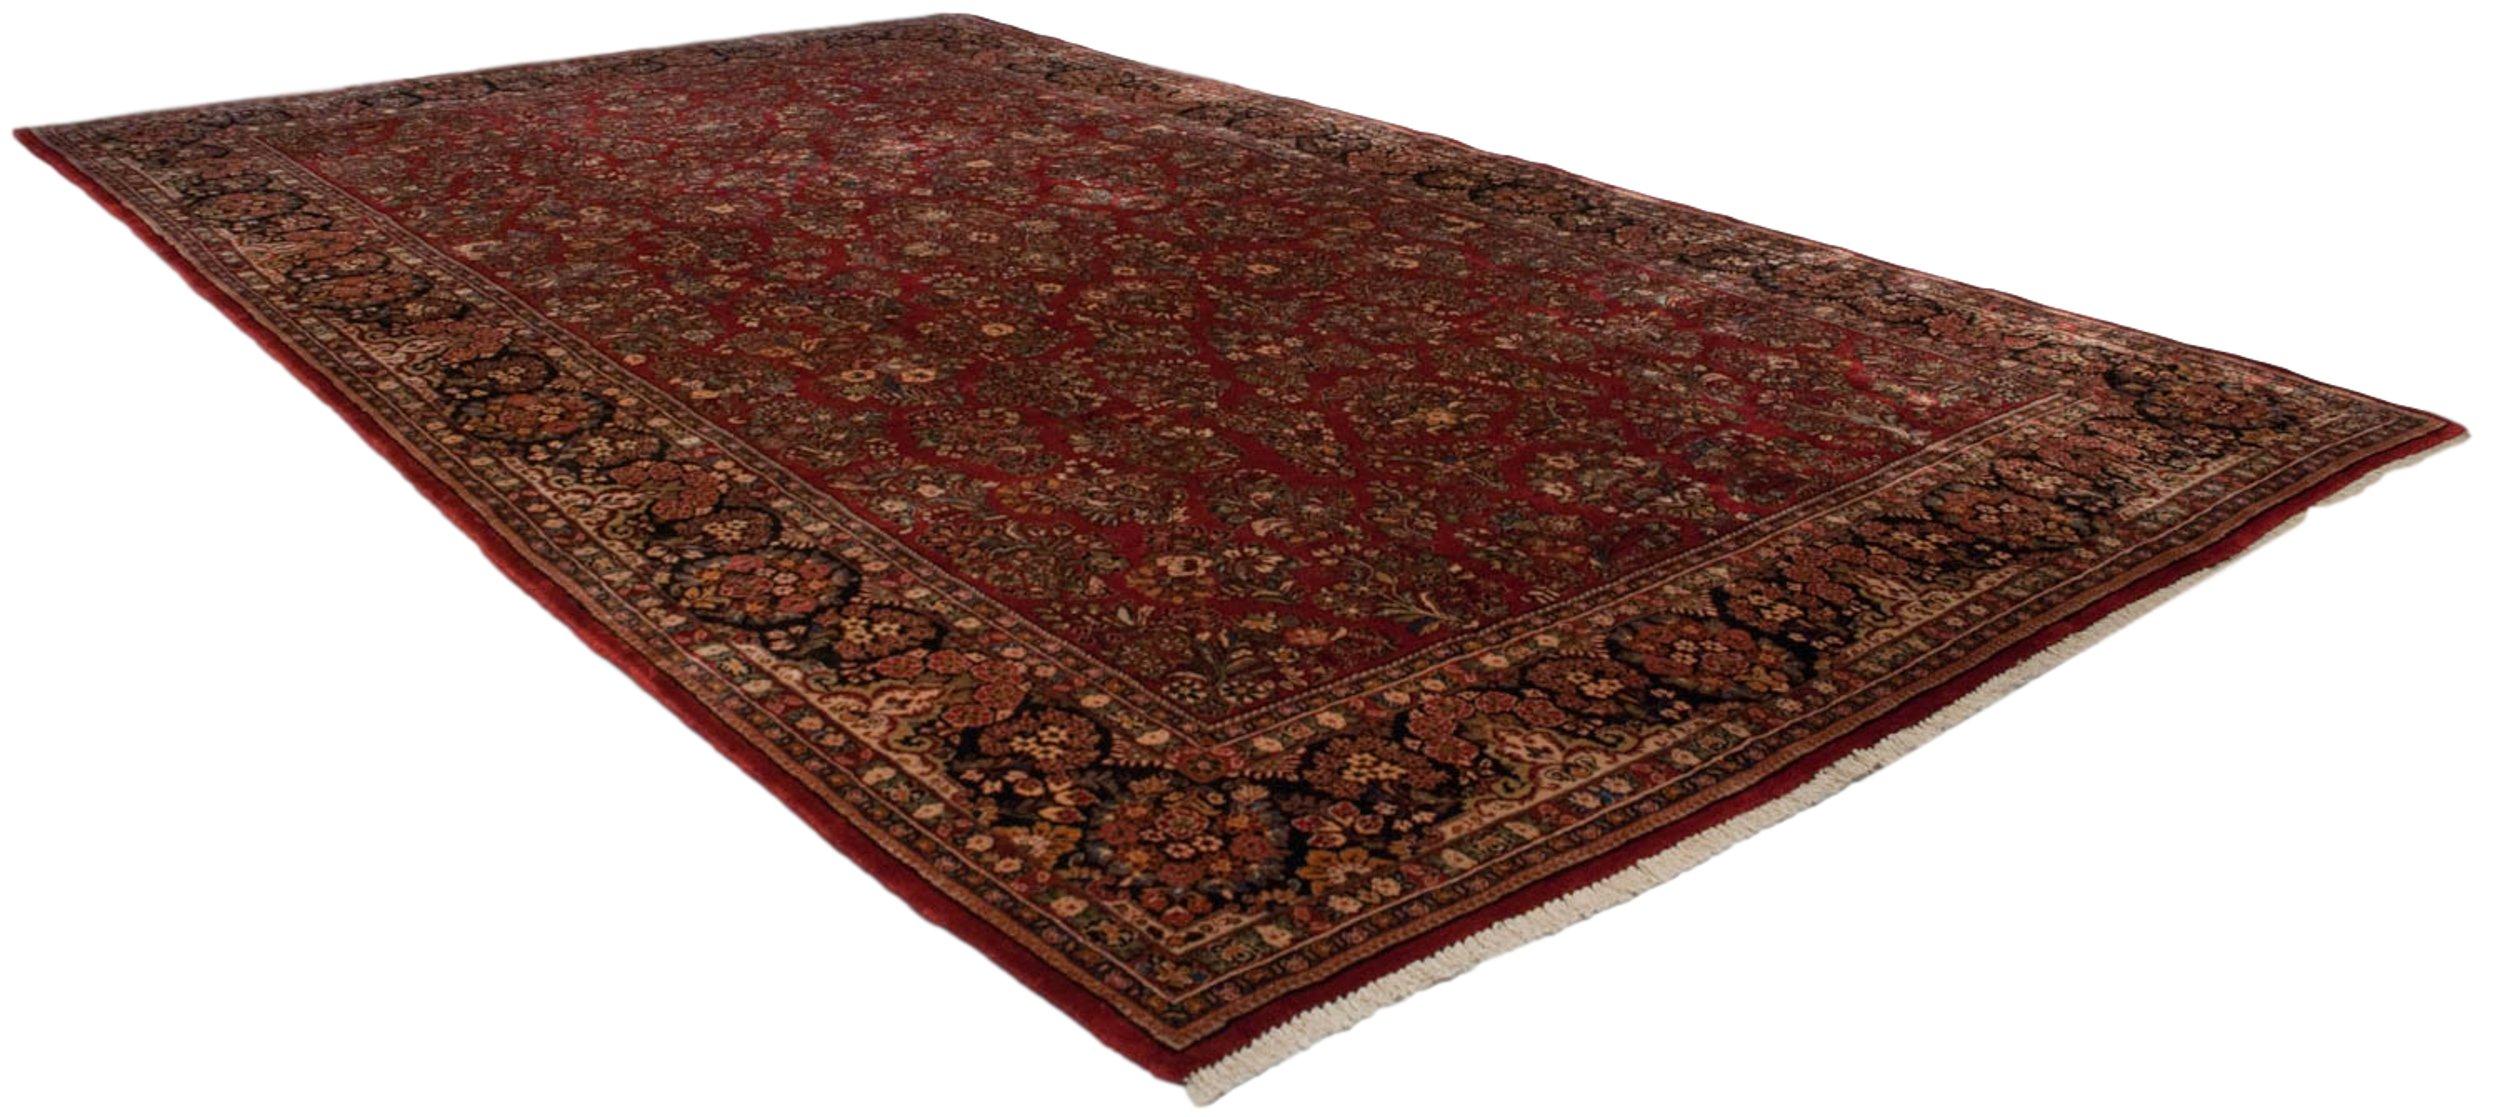 Vintage American Sarouk Carpet For Sale 8